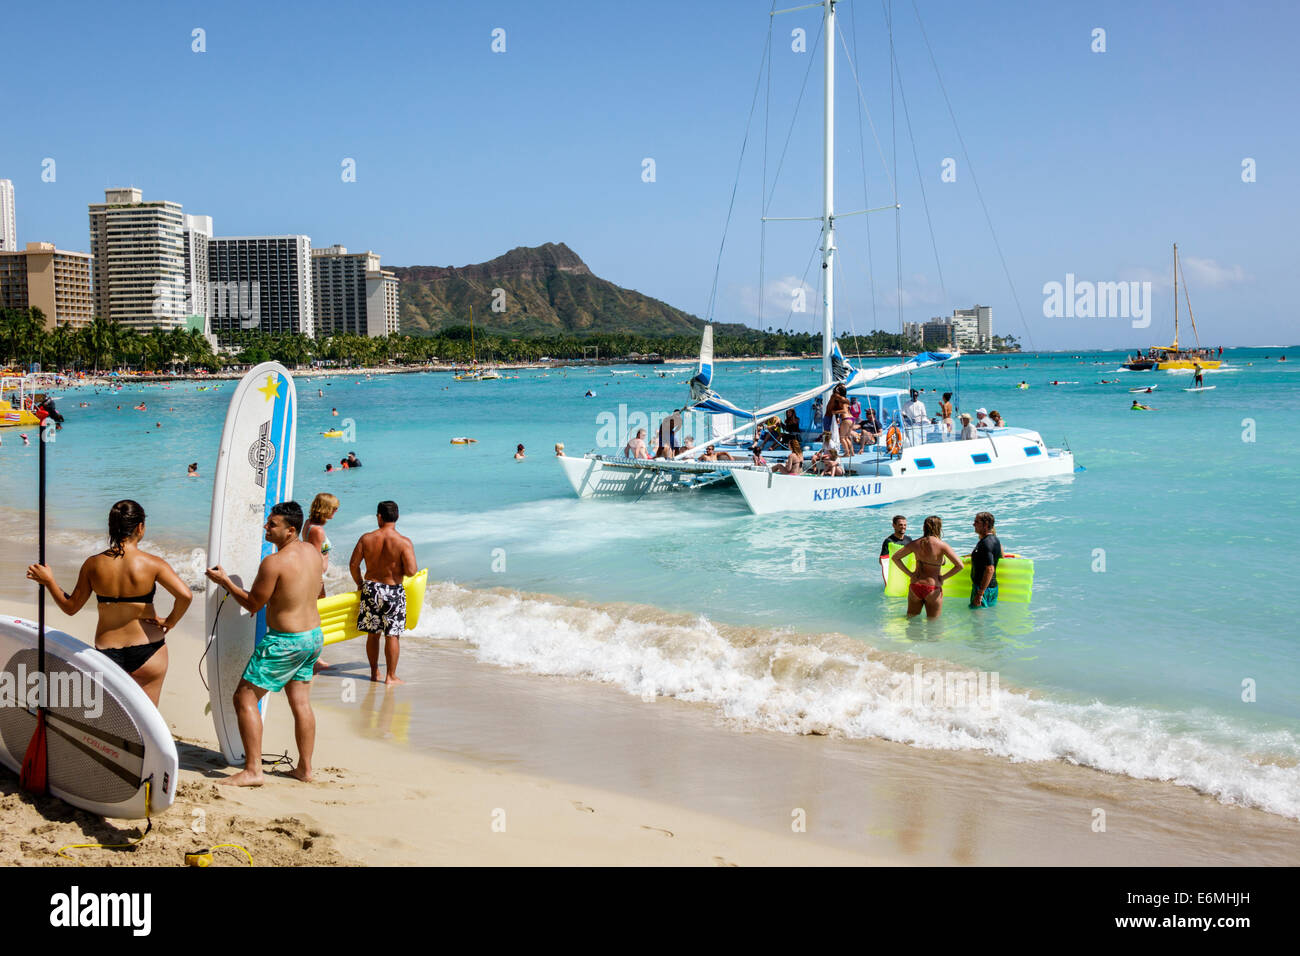 Honolulu Waikiki Beach Hawaii, Hawaiian, Oahu, Pazifischer Ozean, Waterfront, Sonnenanbeter, Surfbrett, Kepoikai II Katamaran, Boot, Diamond Head Crater, ausgestorbene Volca Stockfoto